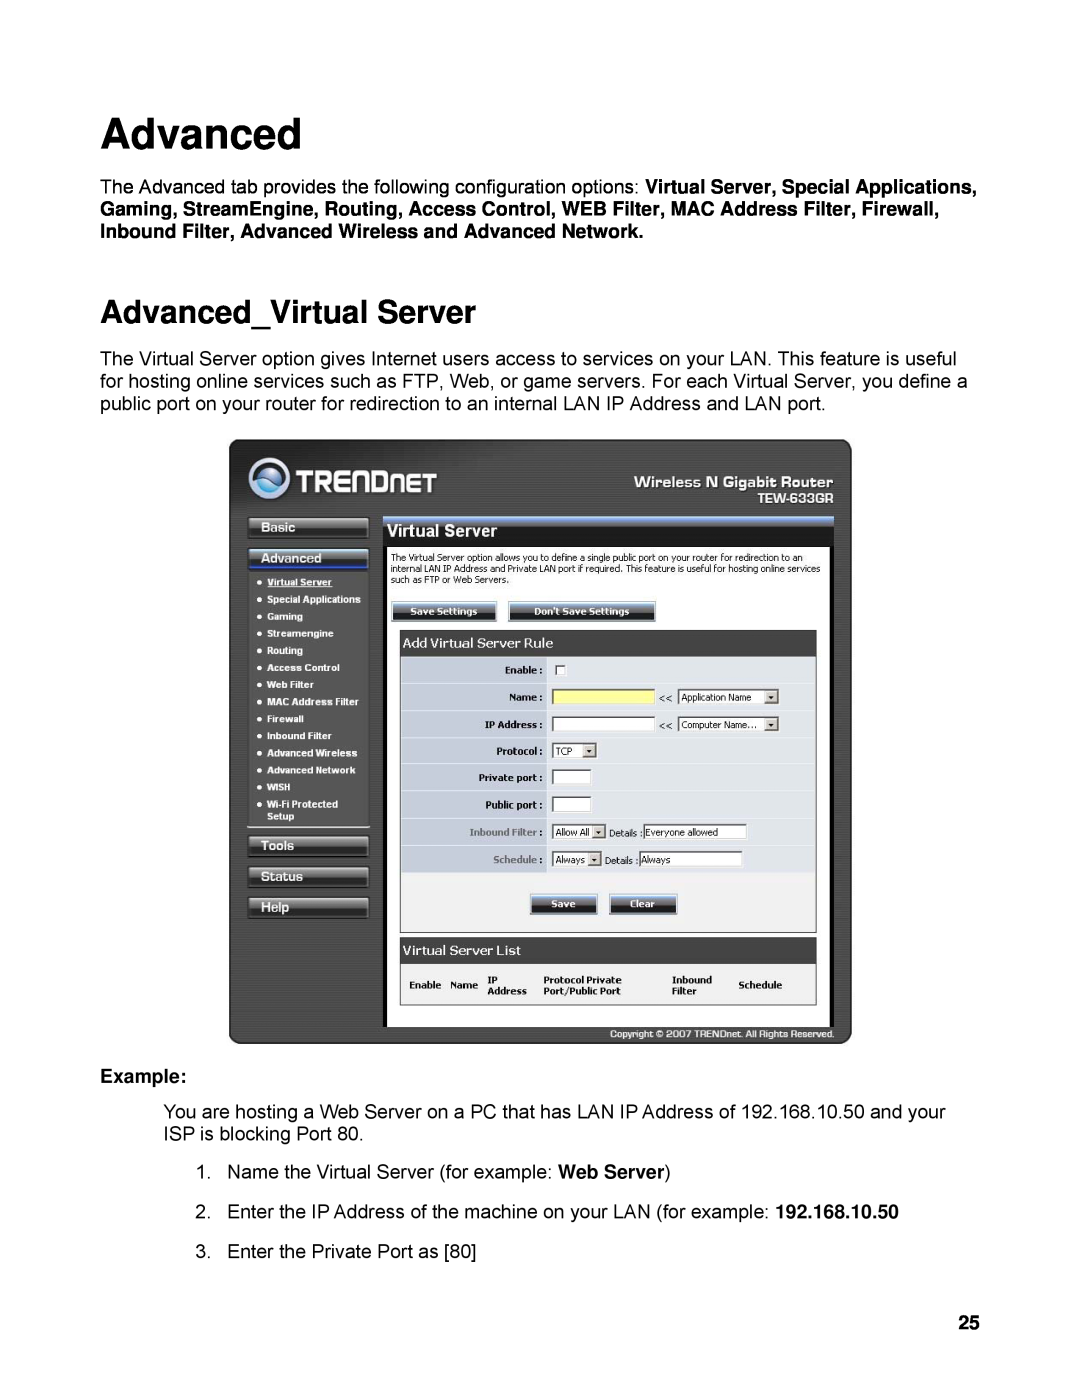 TRENDnet TEW-633GR manual AdvancedVirtual Server, Example 